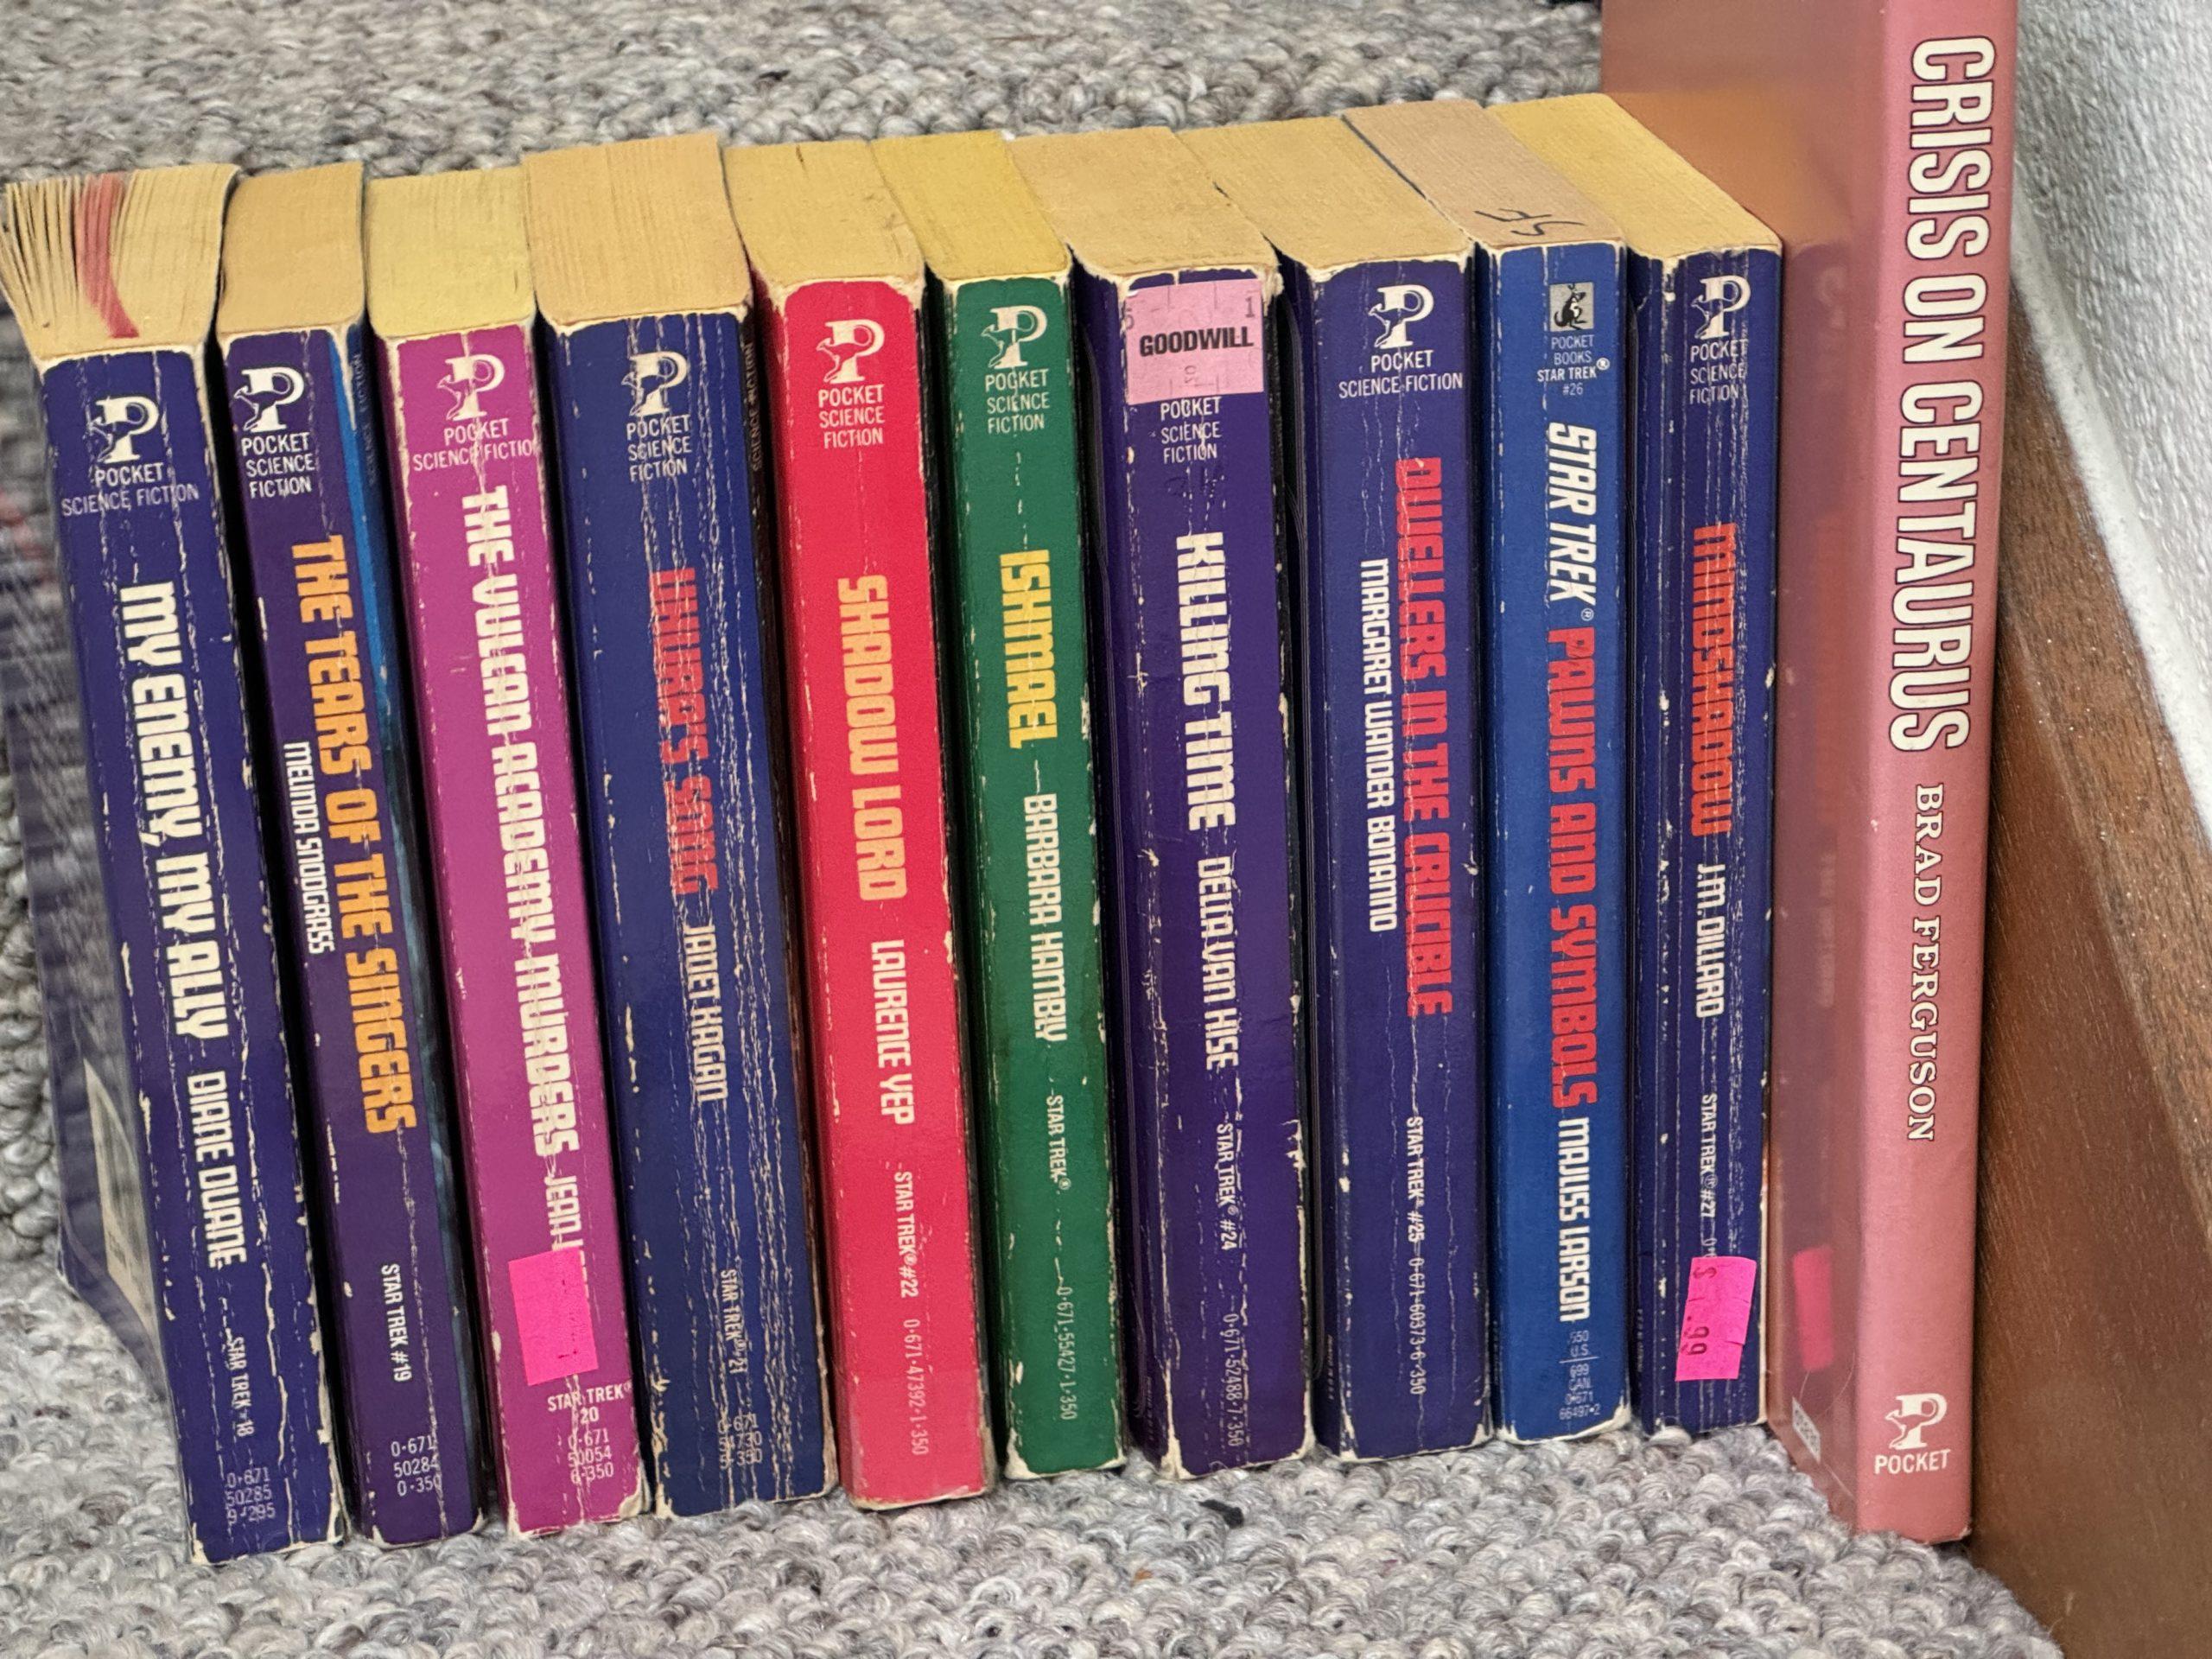 Eleven more Star Trek novels.